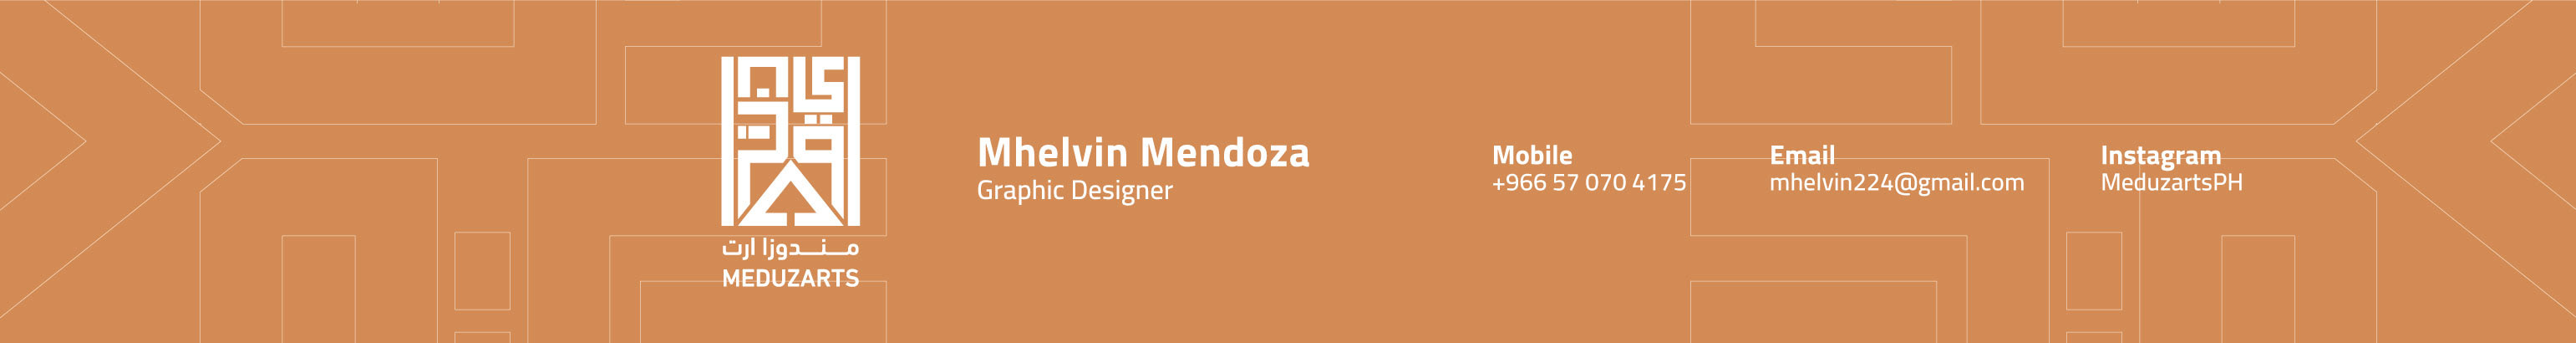 Mhelvin Mendozas profilbanner